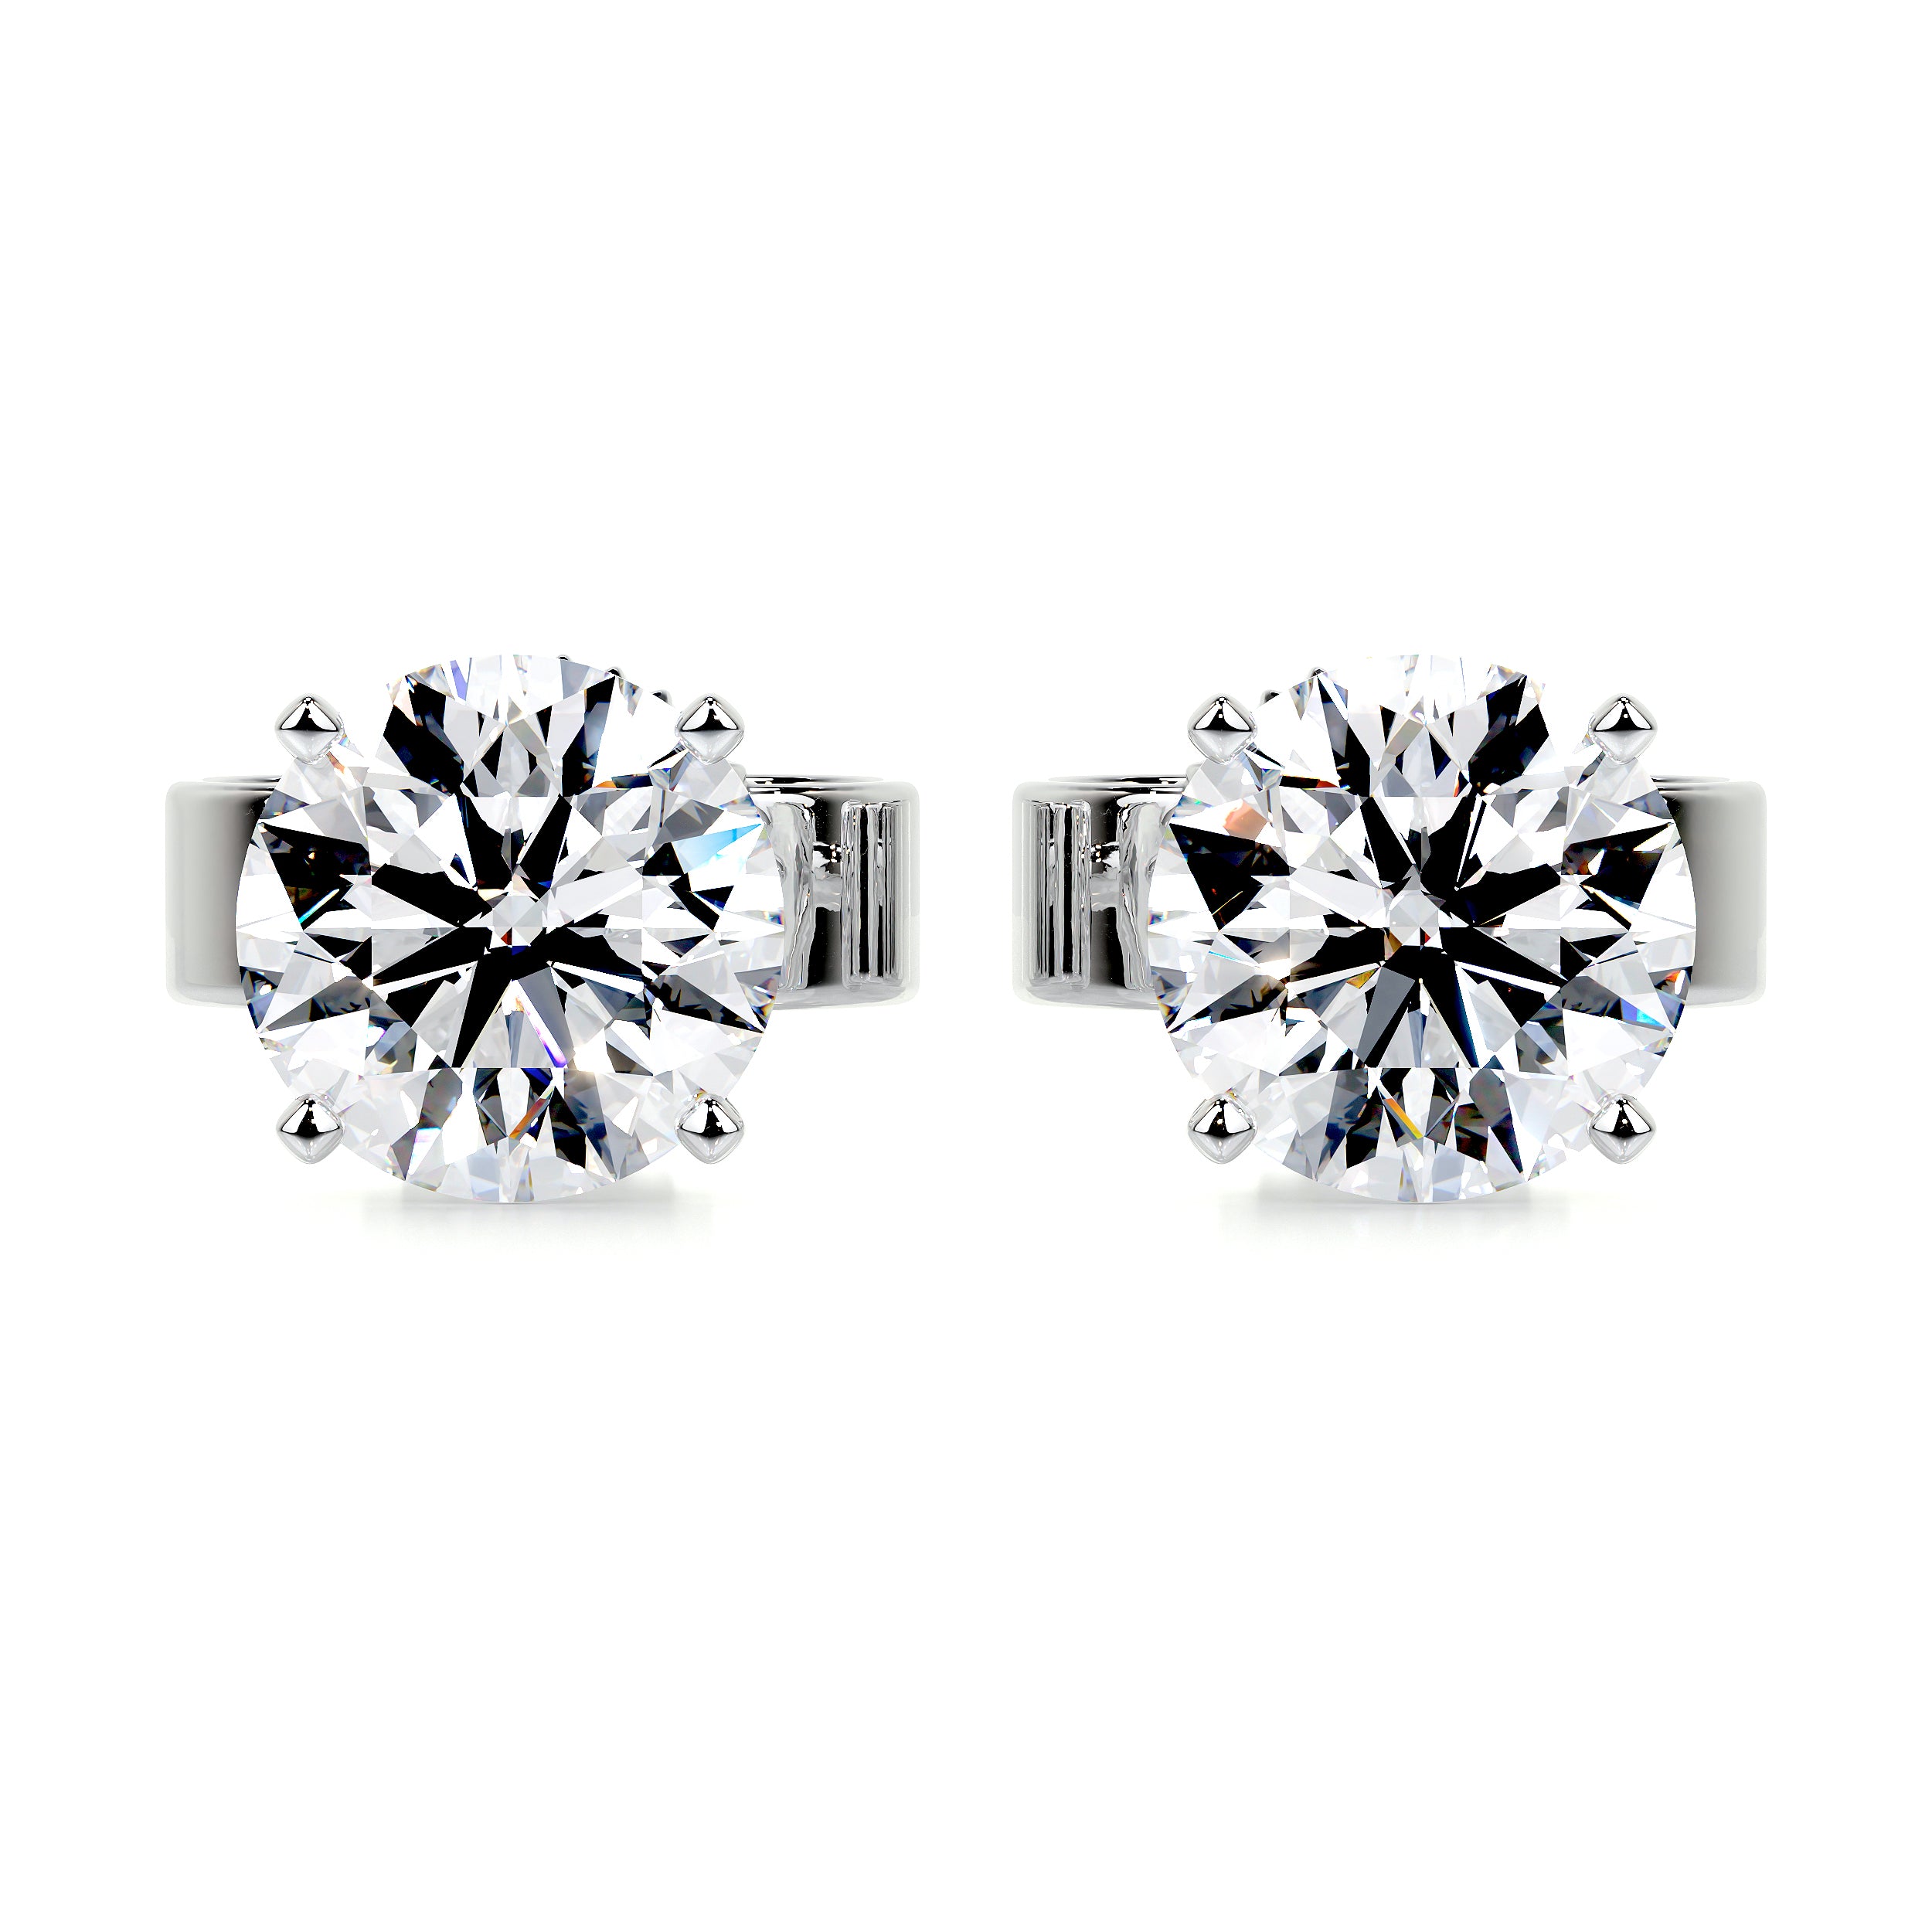 Allen Diamond Earrings   (5 Carat) -14K White Gold